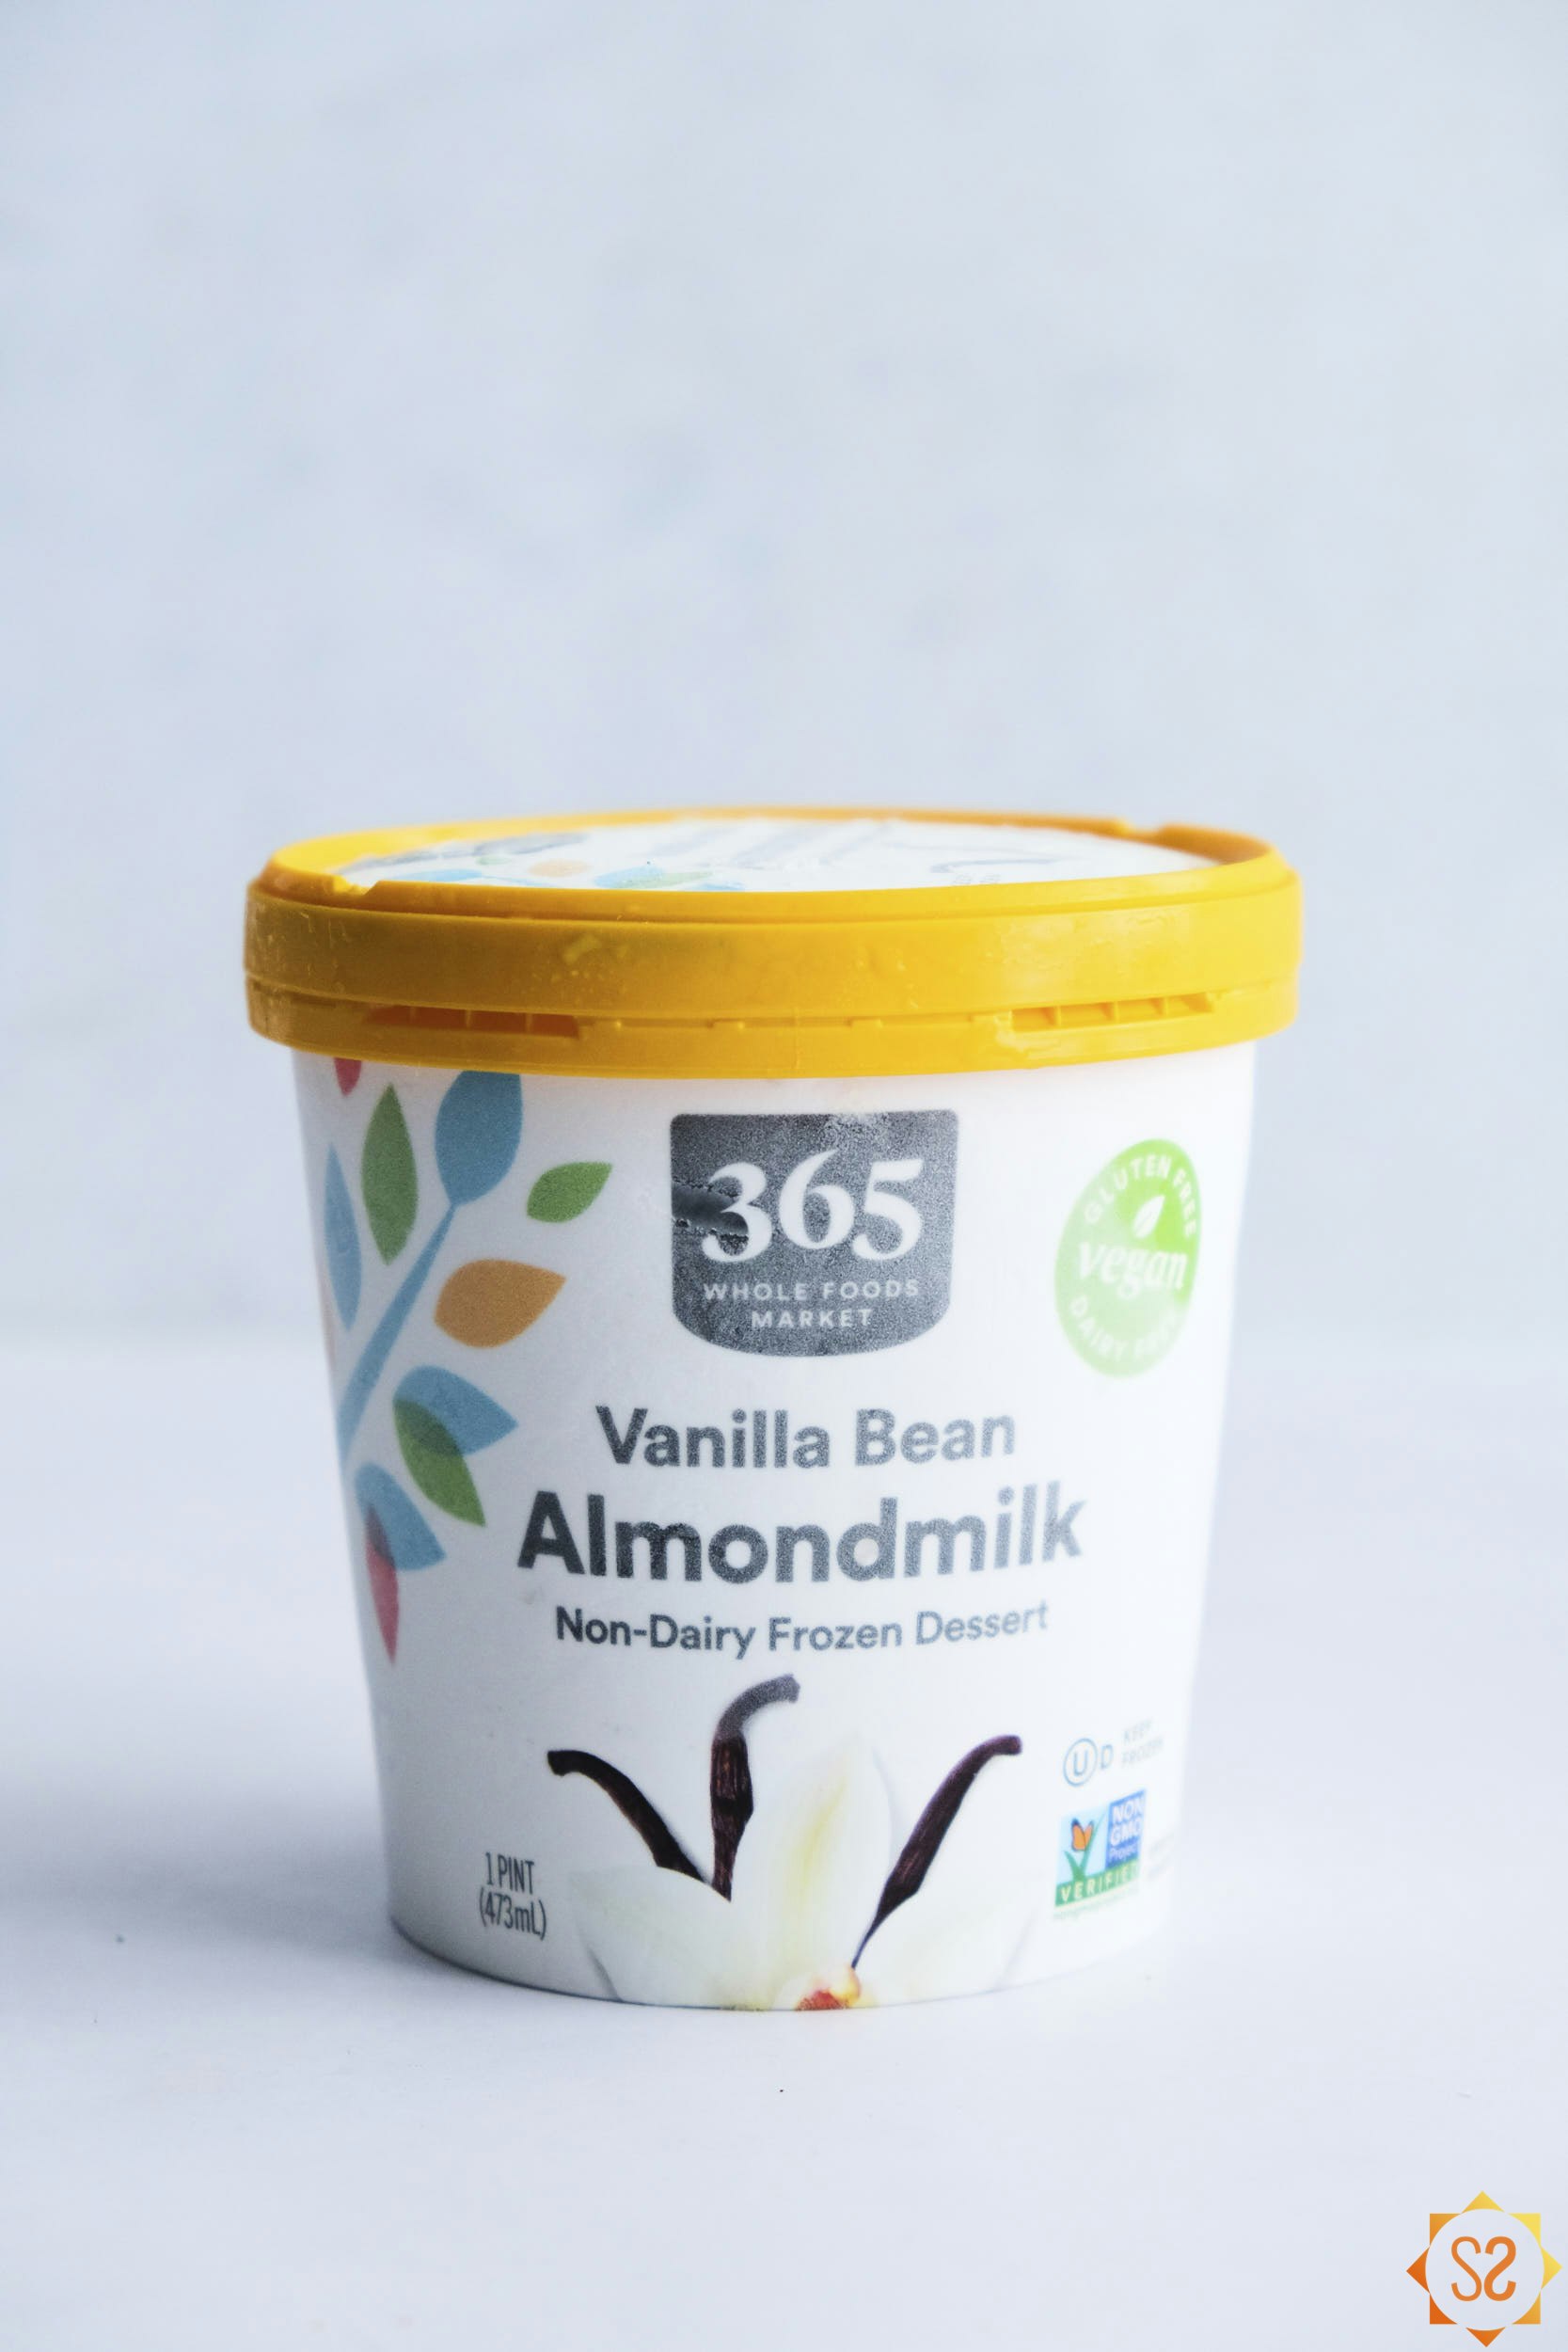 365 Vanilla Bean Almondmilk Non-Dairy Frozen Dessert Pint